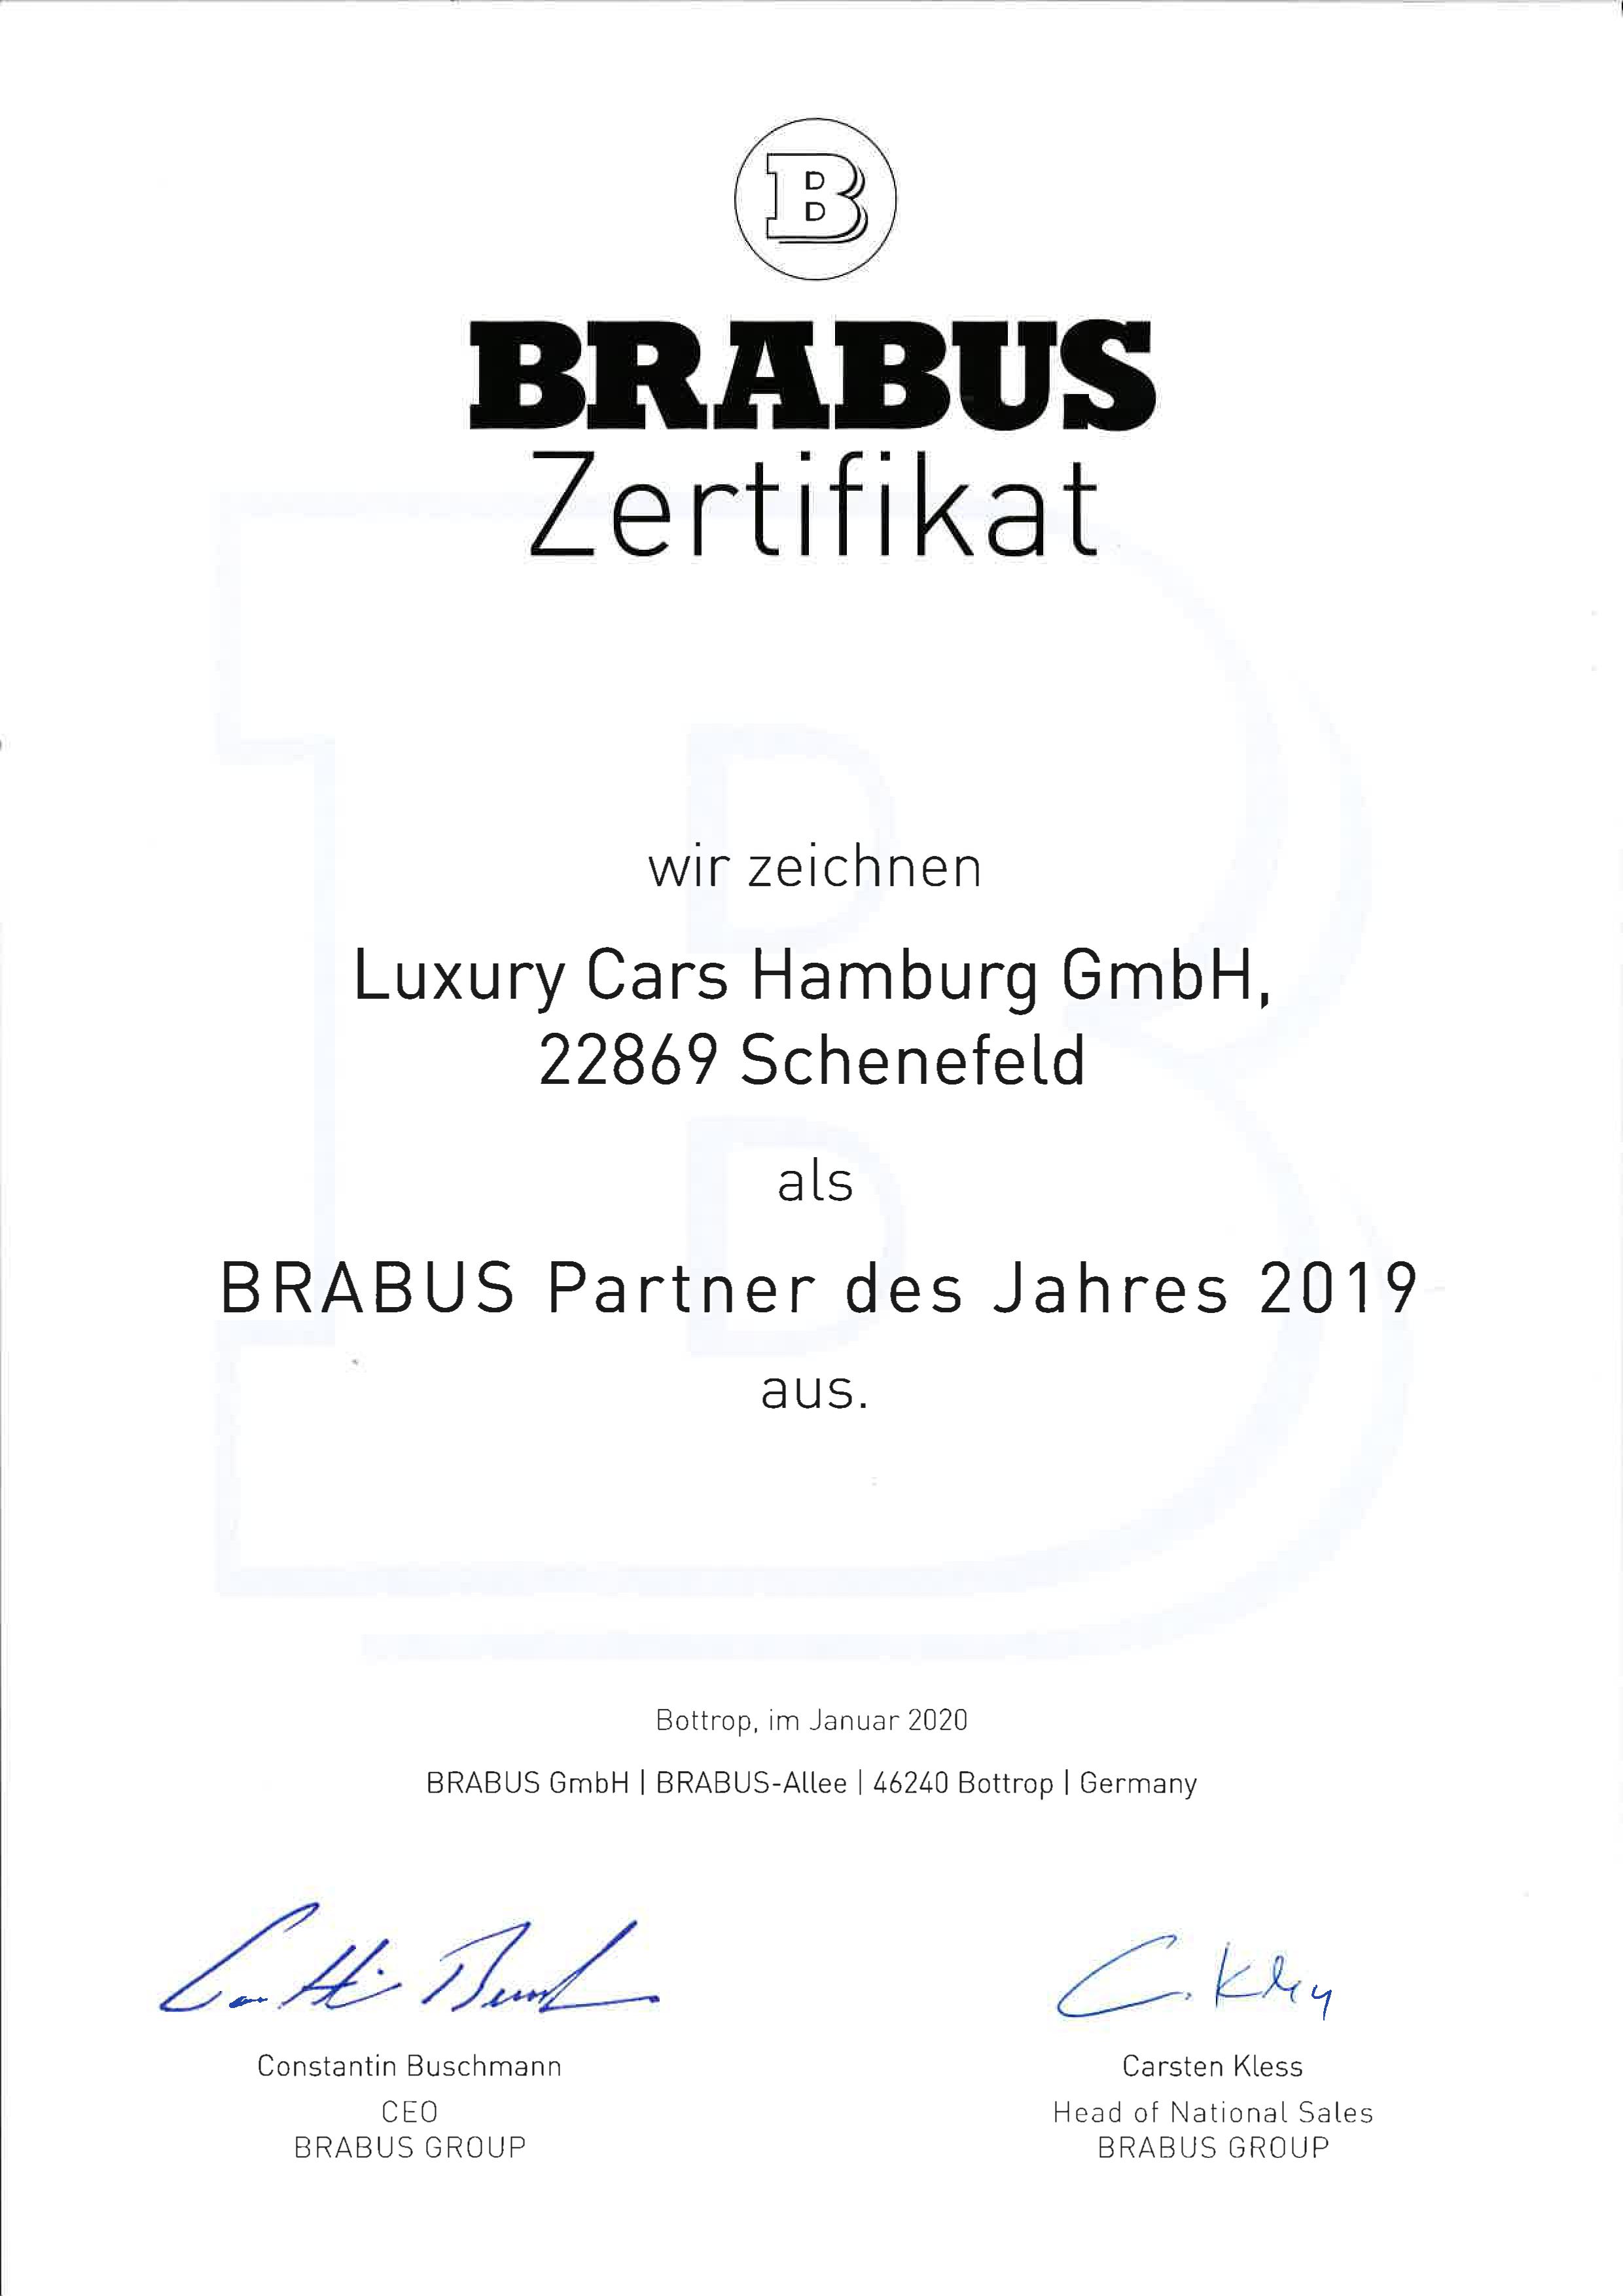 BRABUS partner of the year 2019